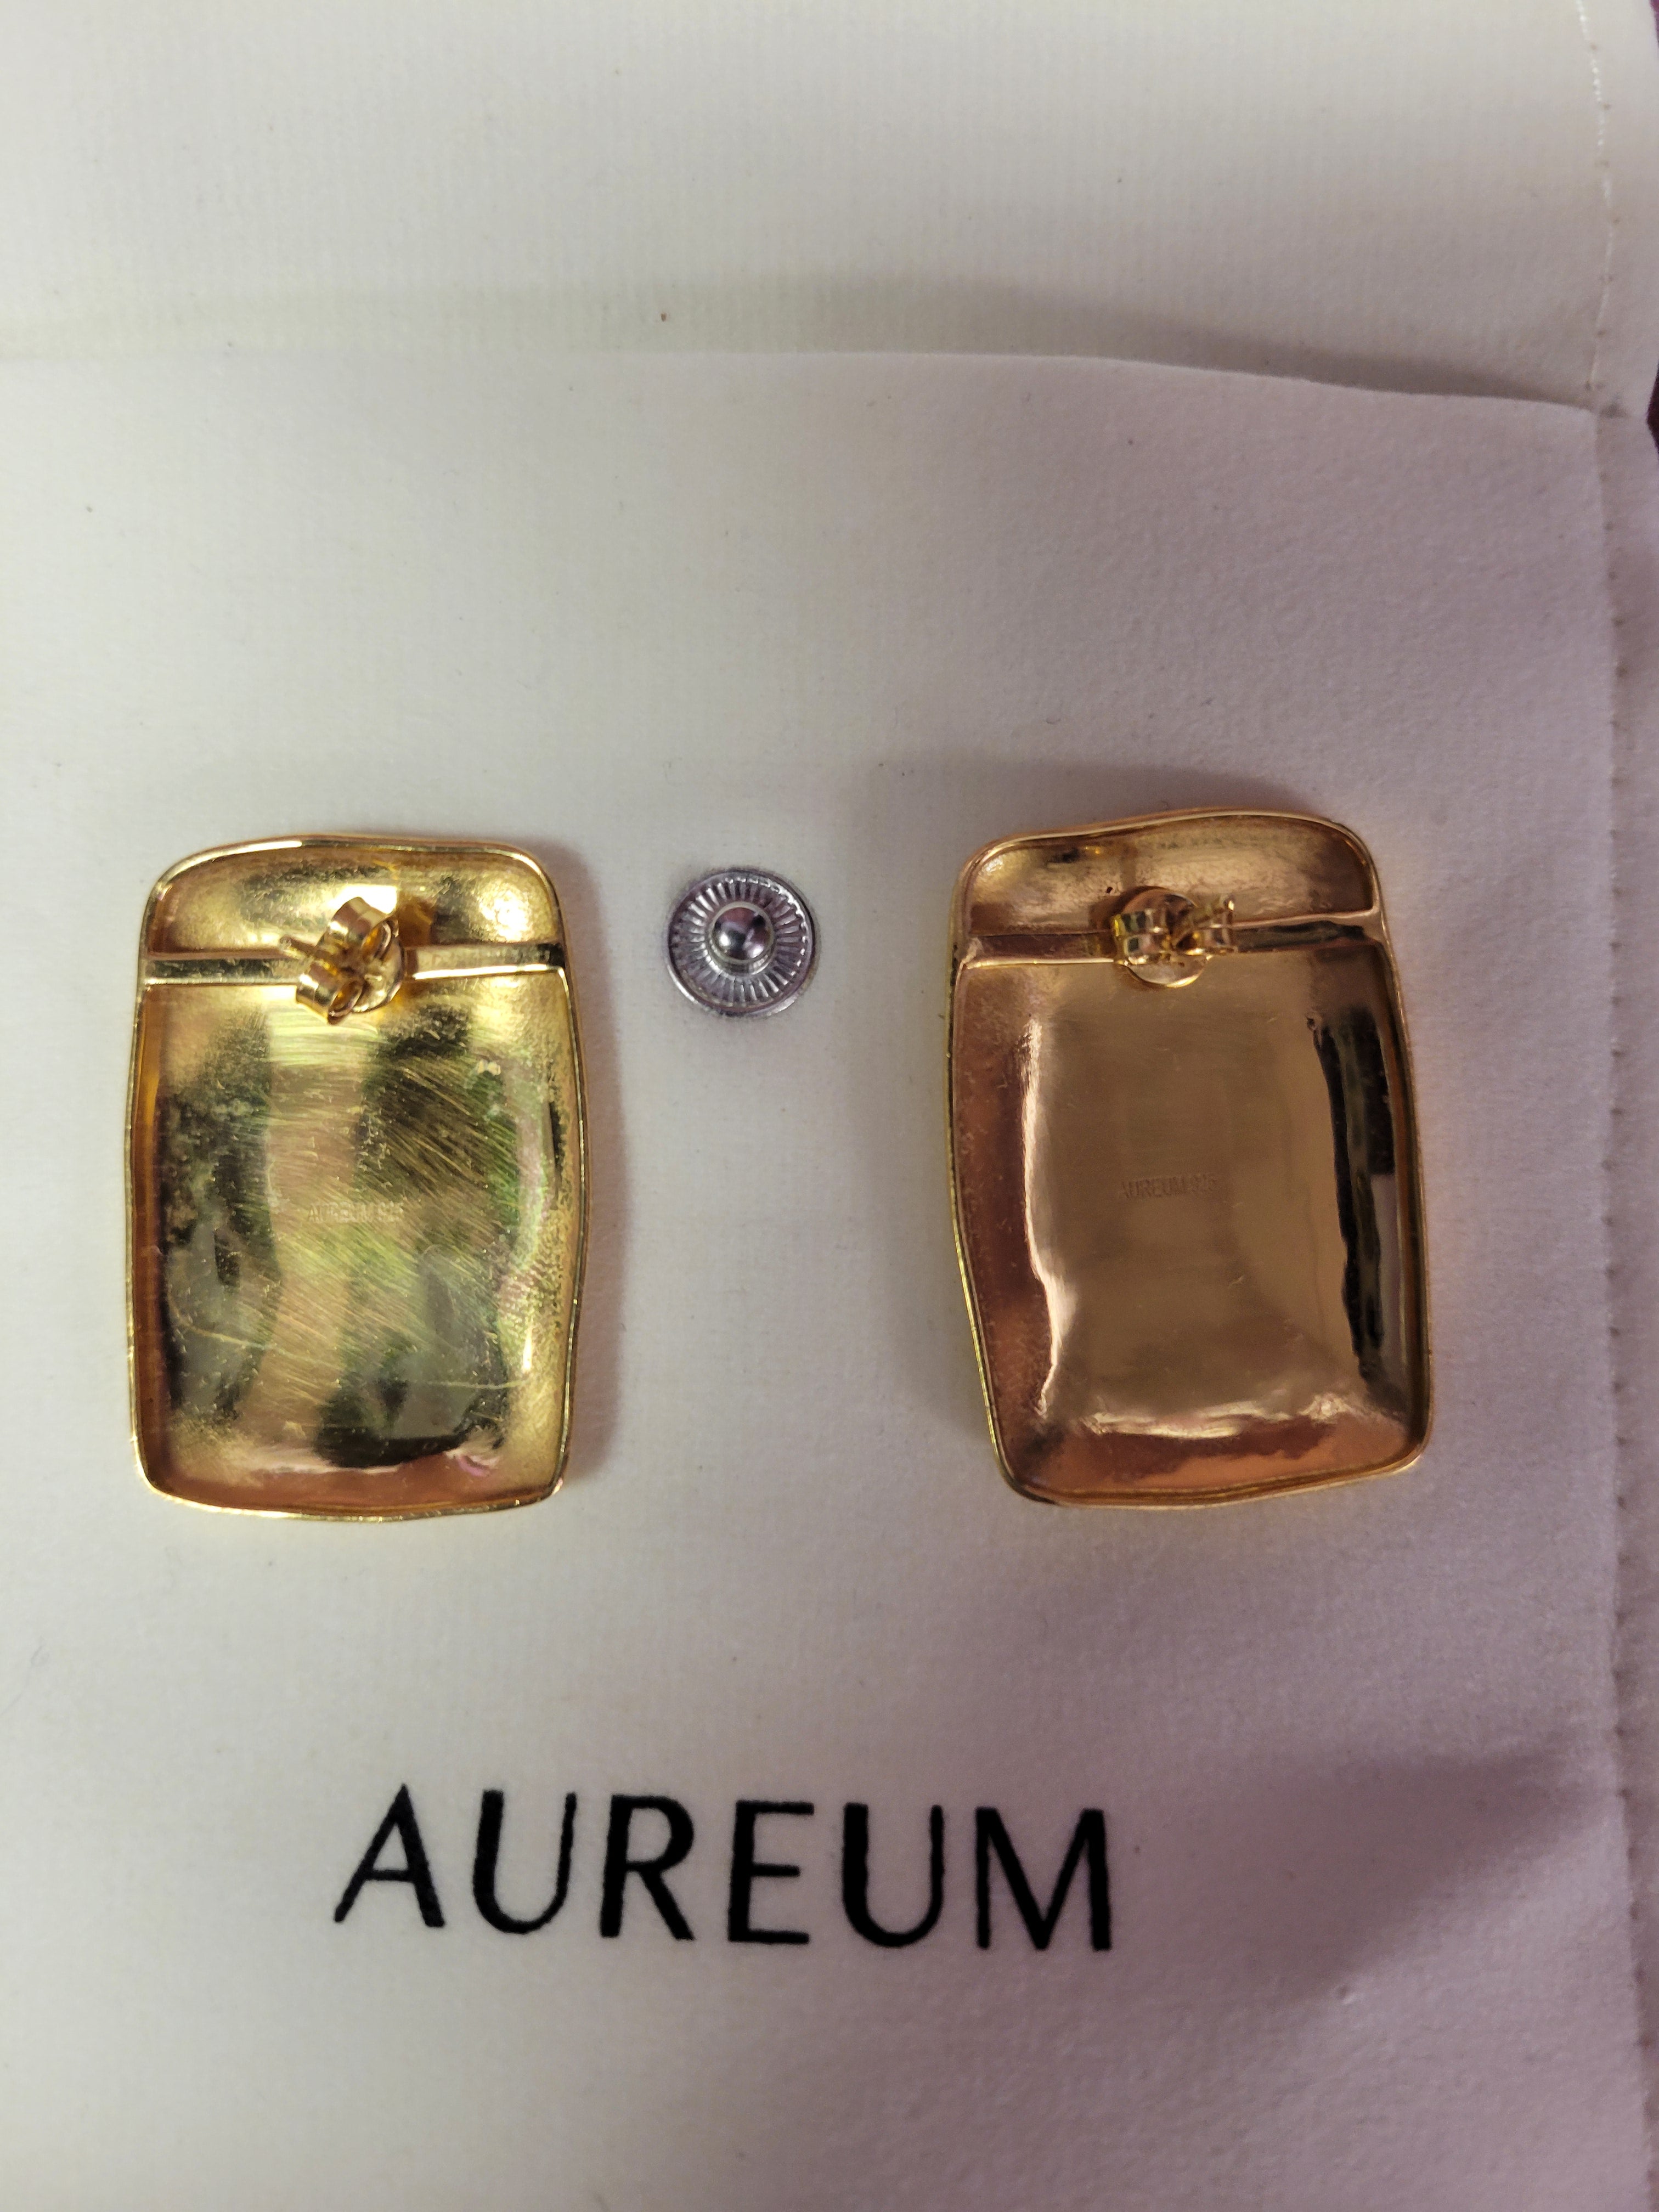 AUREUM Cait Earrings in 24k Gold Vermeil Size All